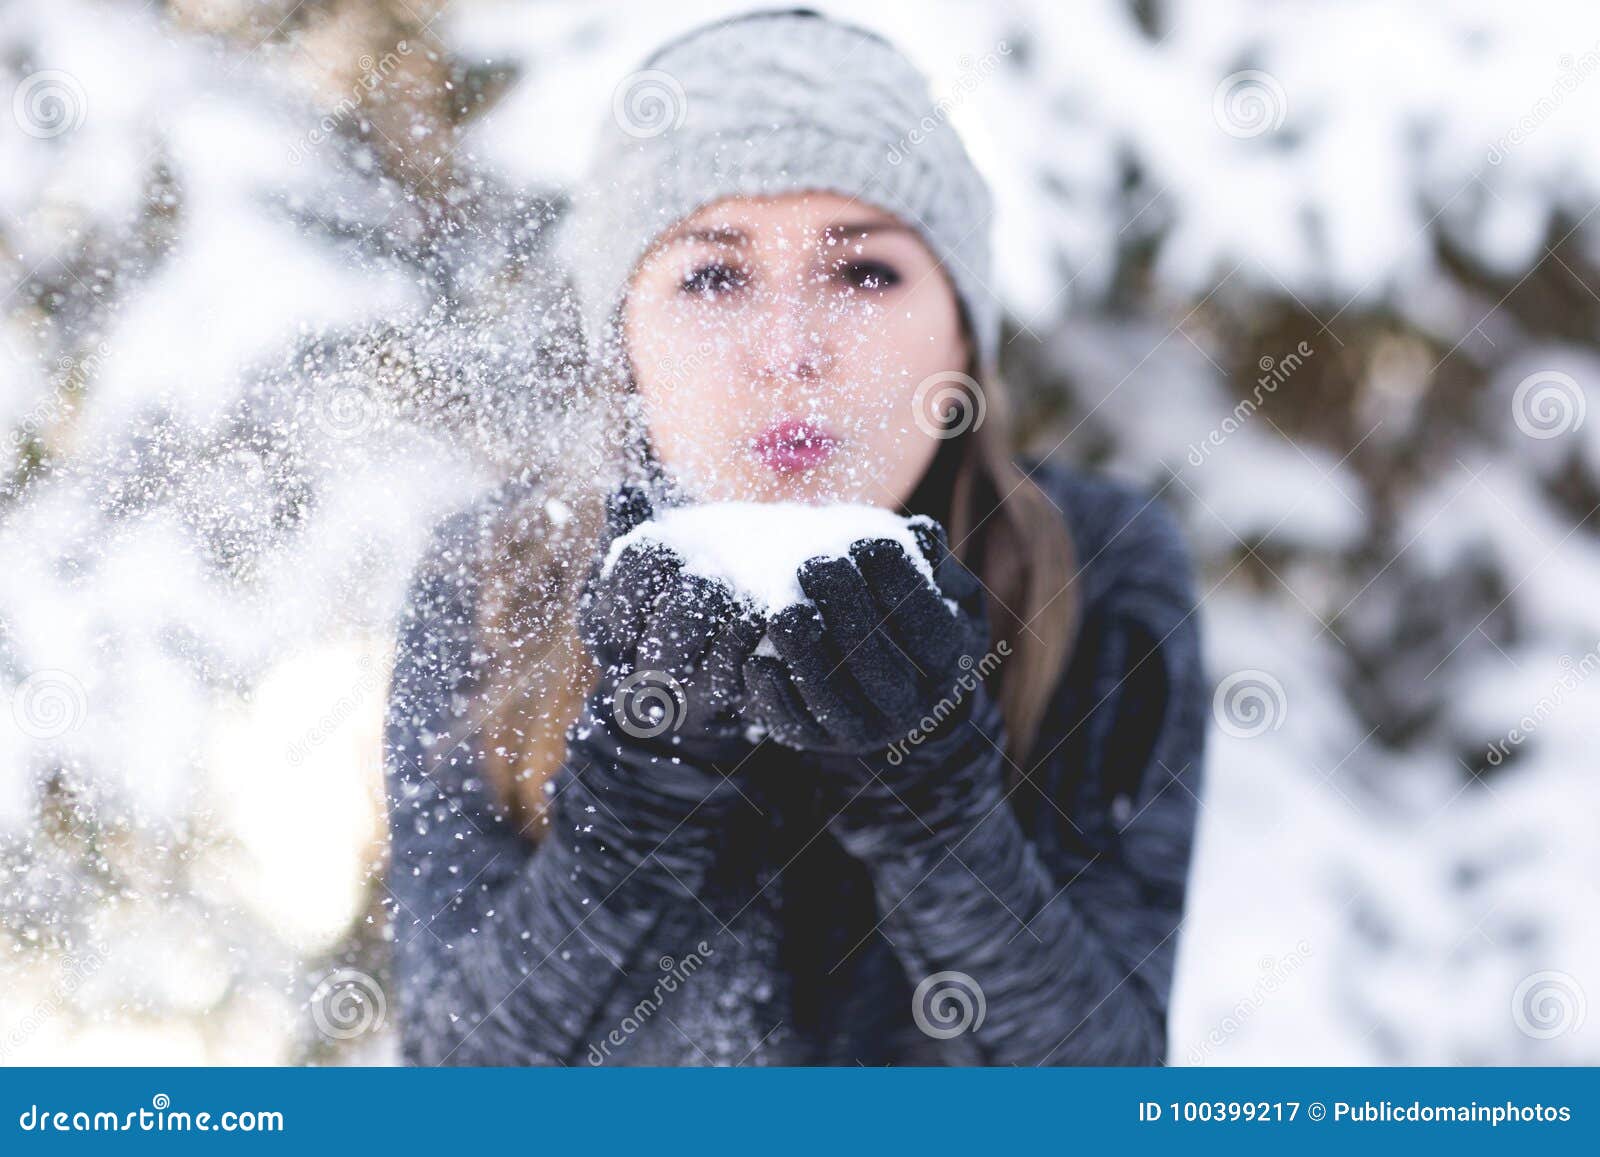 Winter, Snow, Freezing, Fun Picture. Image: 100399217